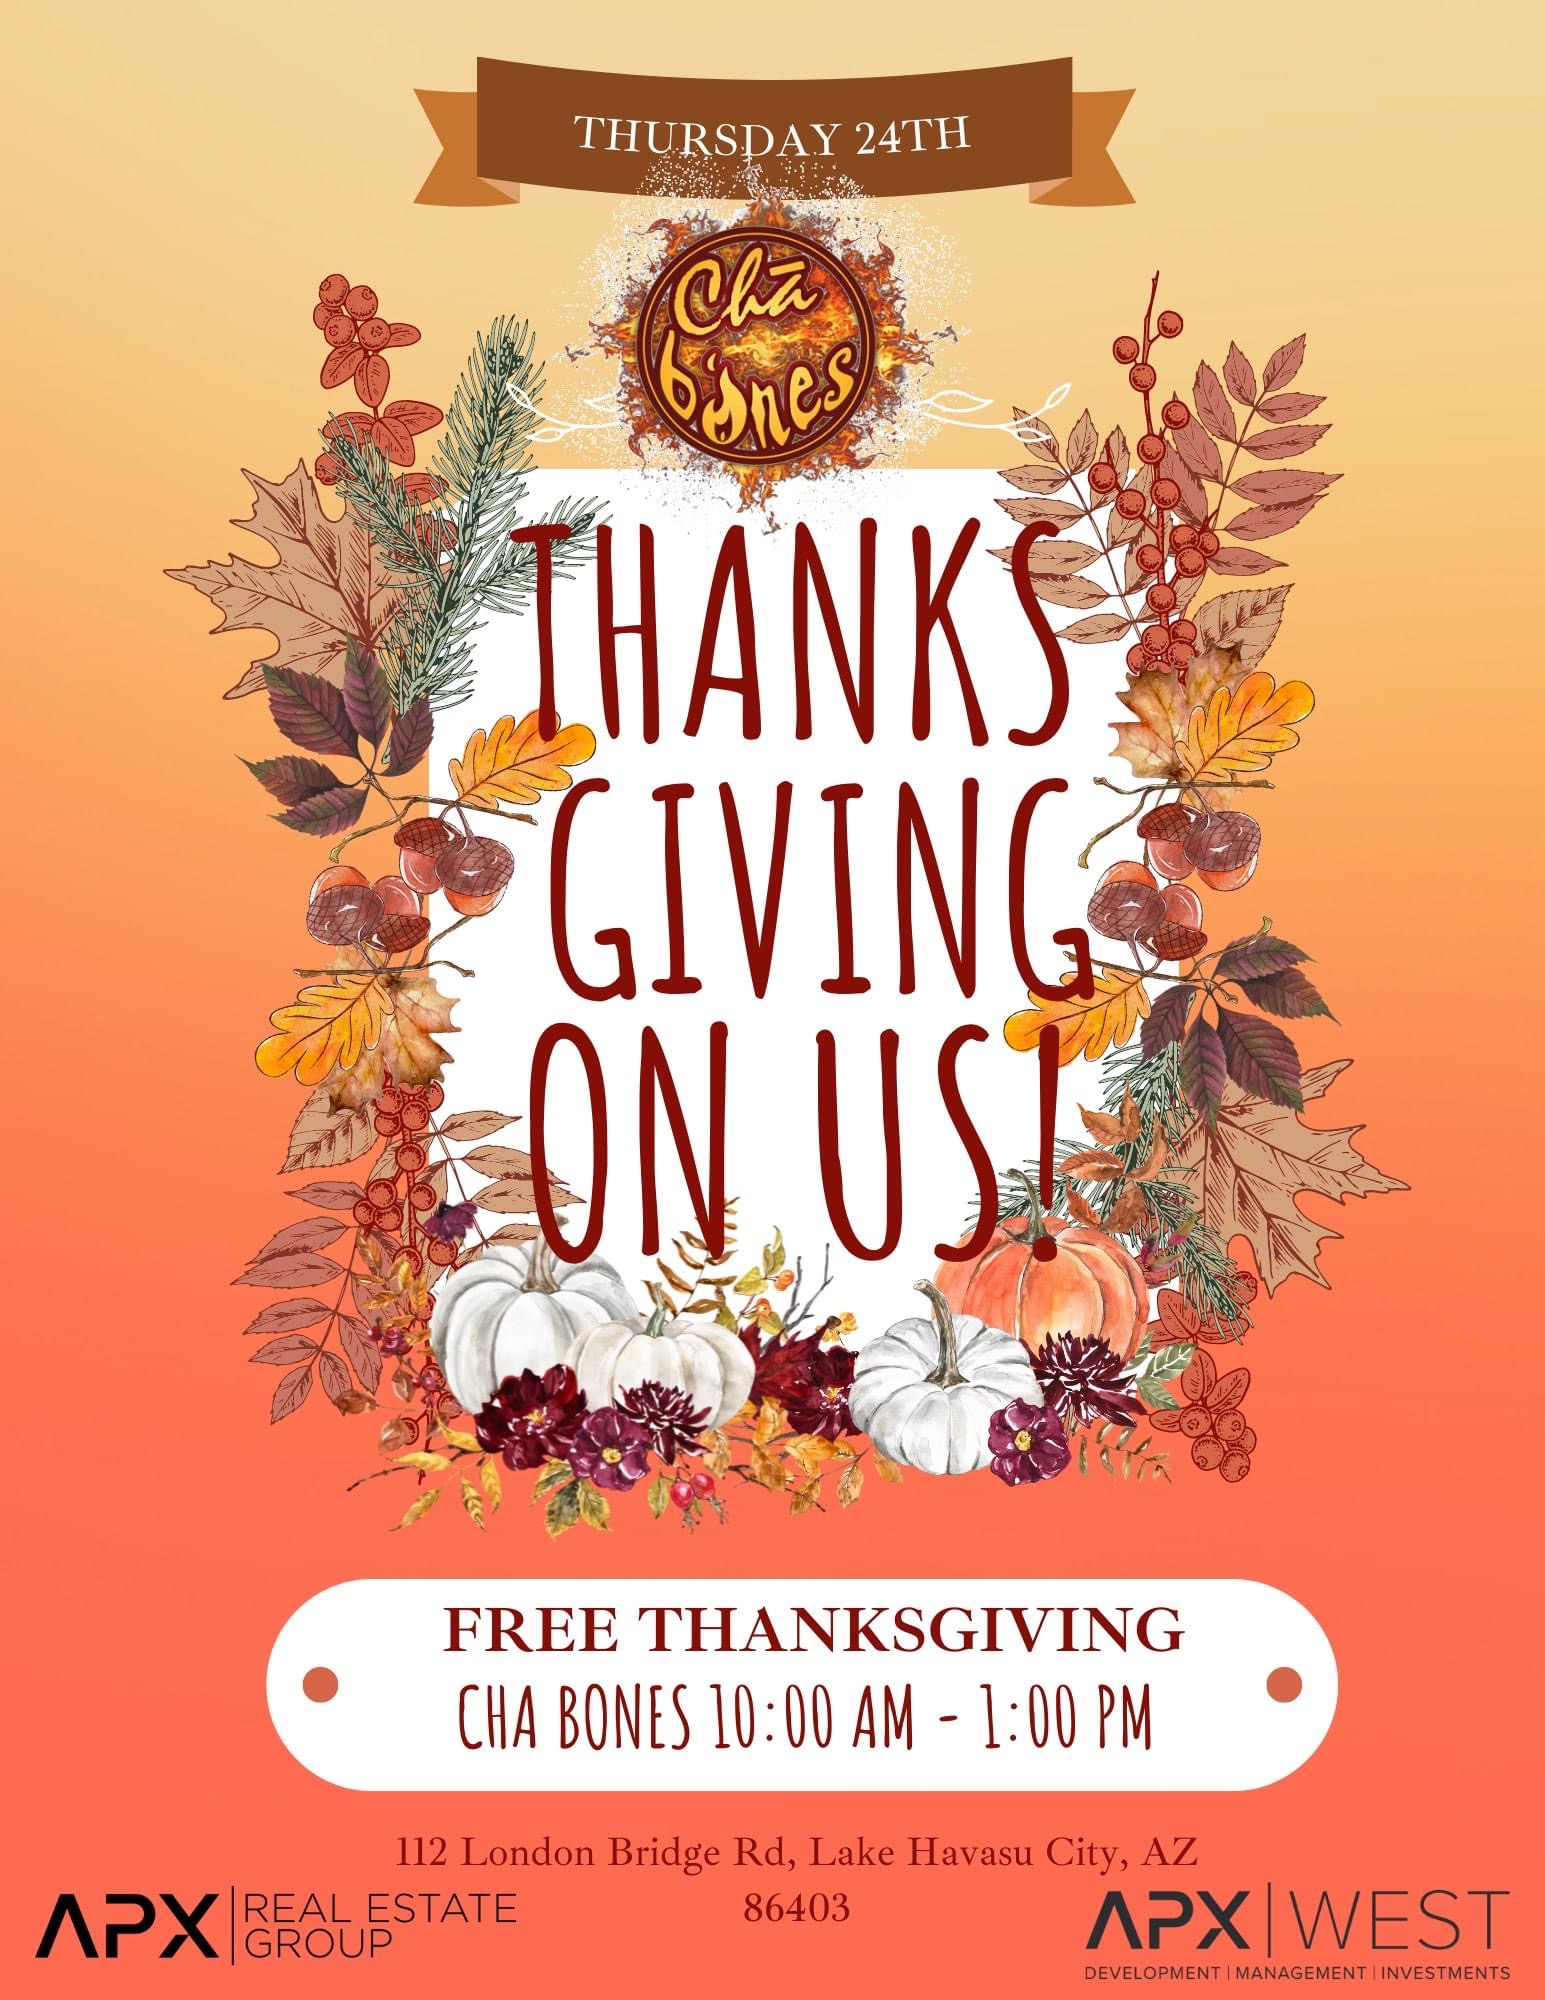 ChaBones Free Thanksgiving Meals